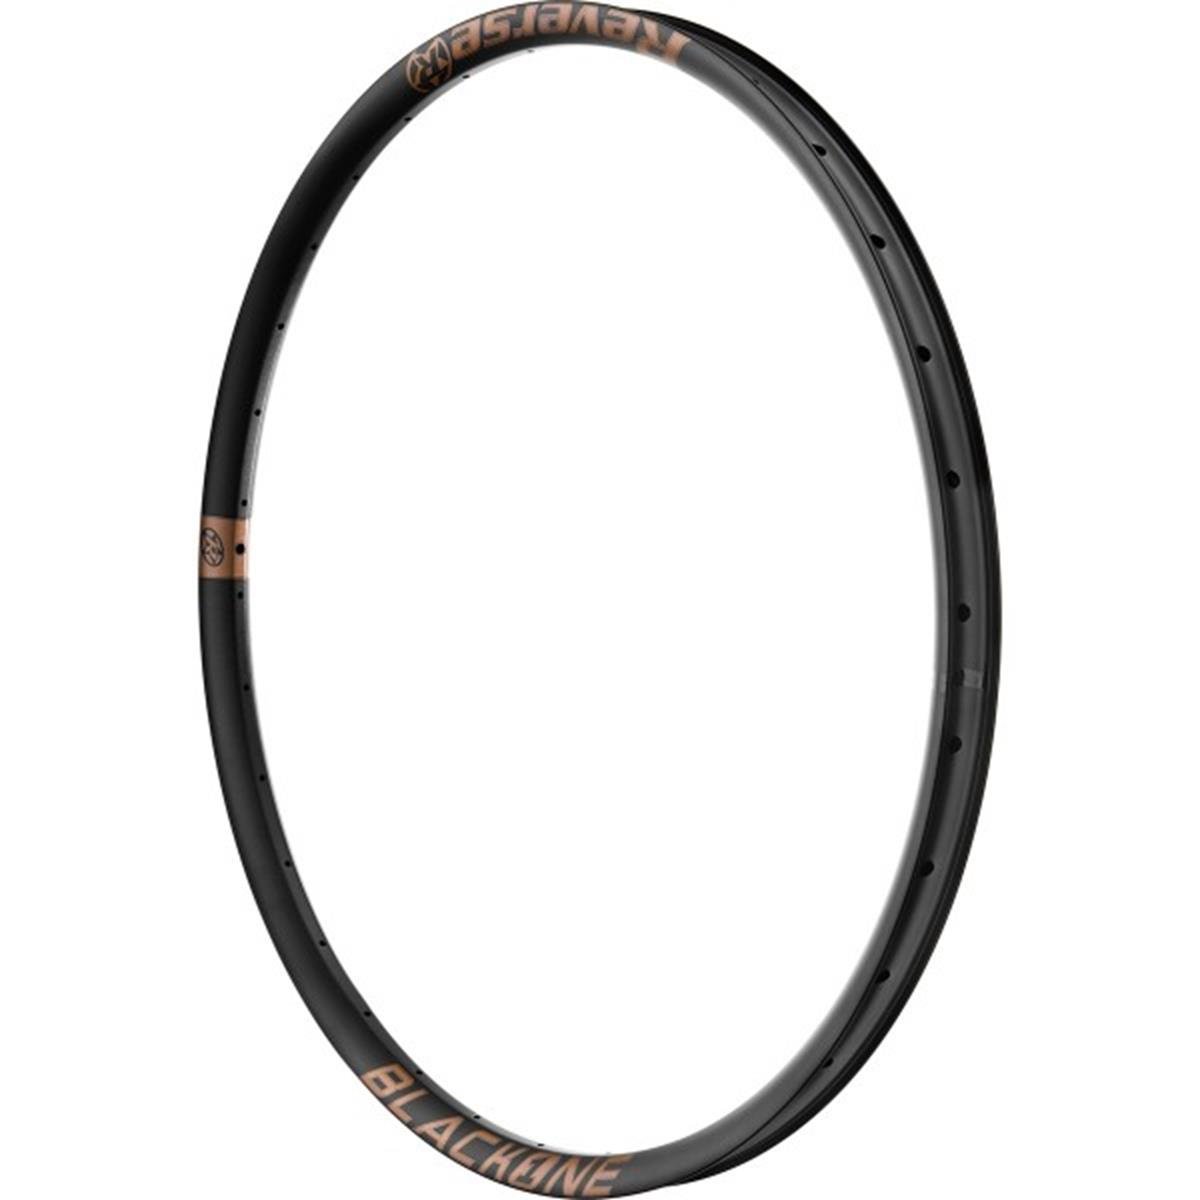 Reverse Components MTB Rim Black One Black/Copper, 29 Inches x 30 mm, Aluminium